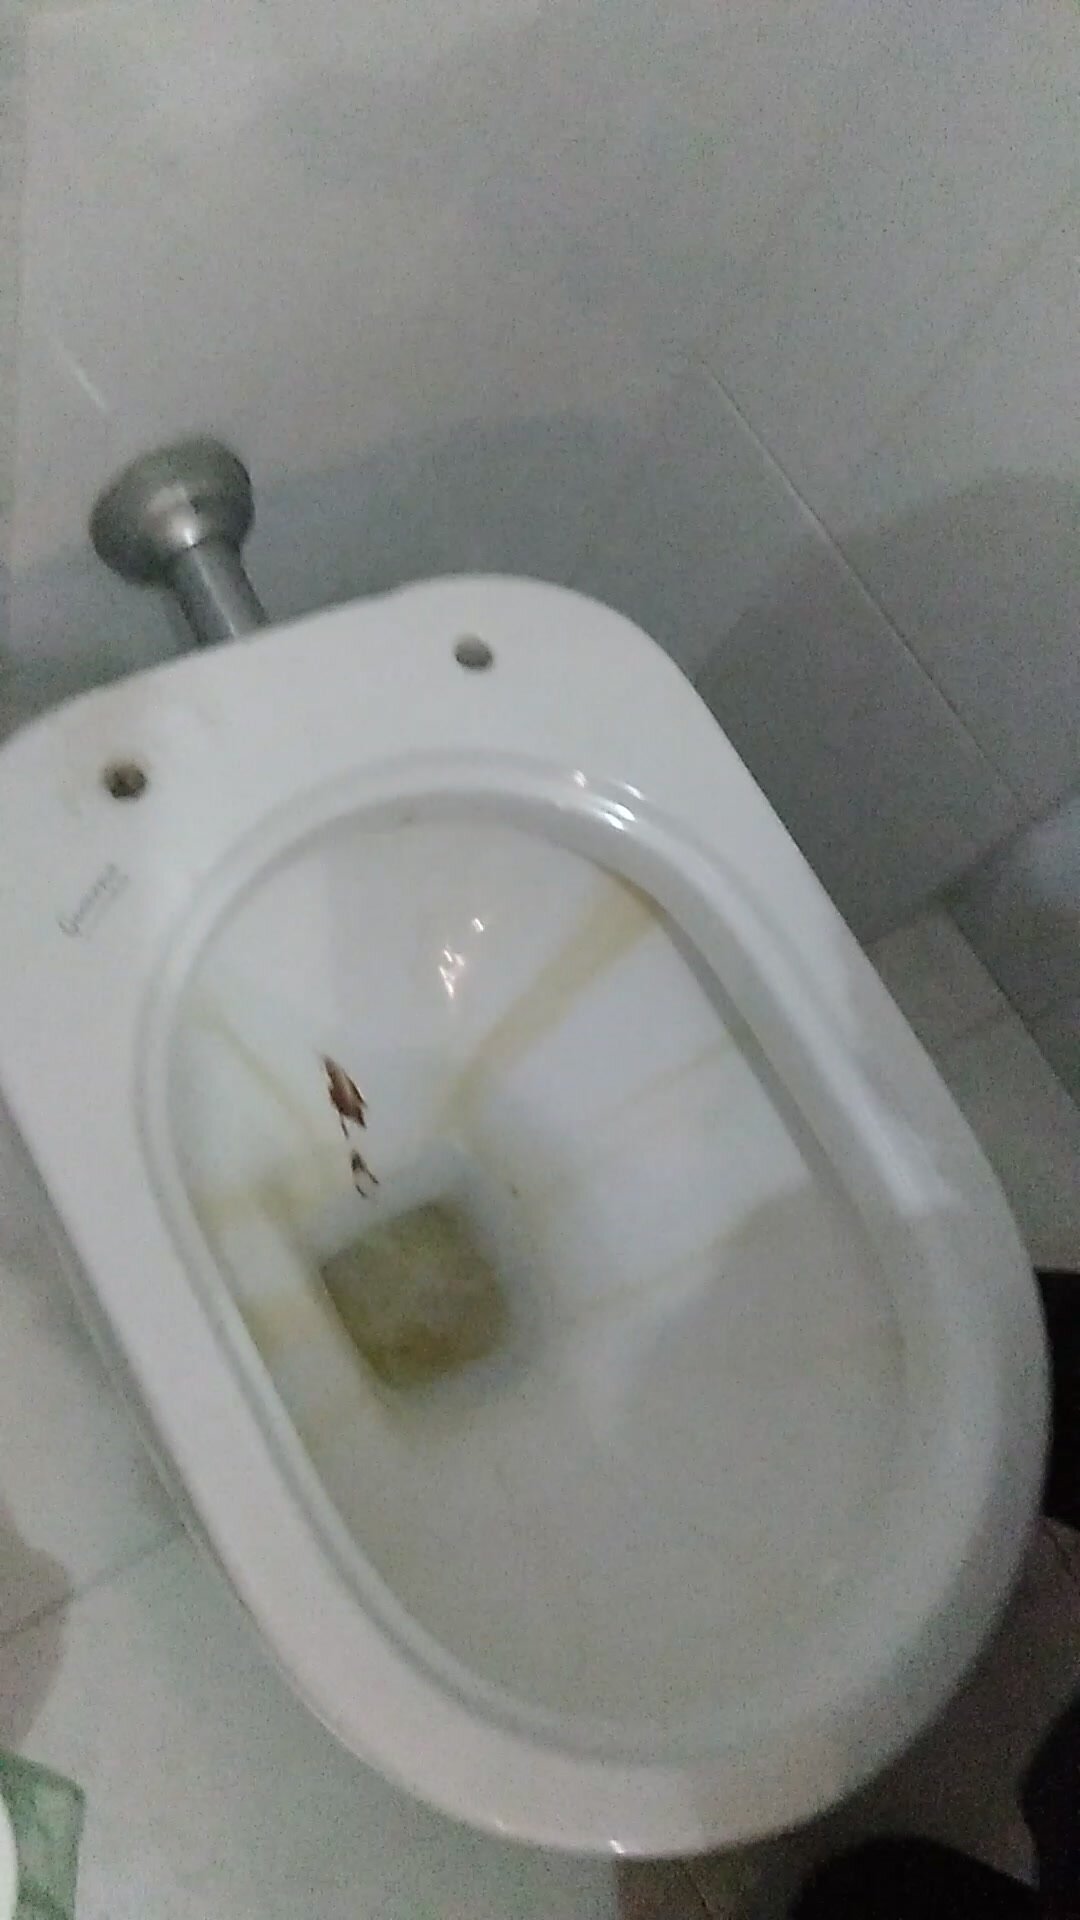 taste girfriend shit in the toilet bowl